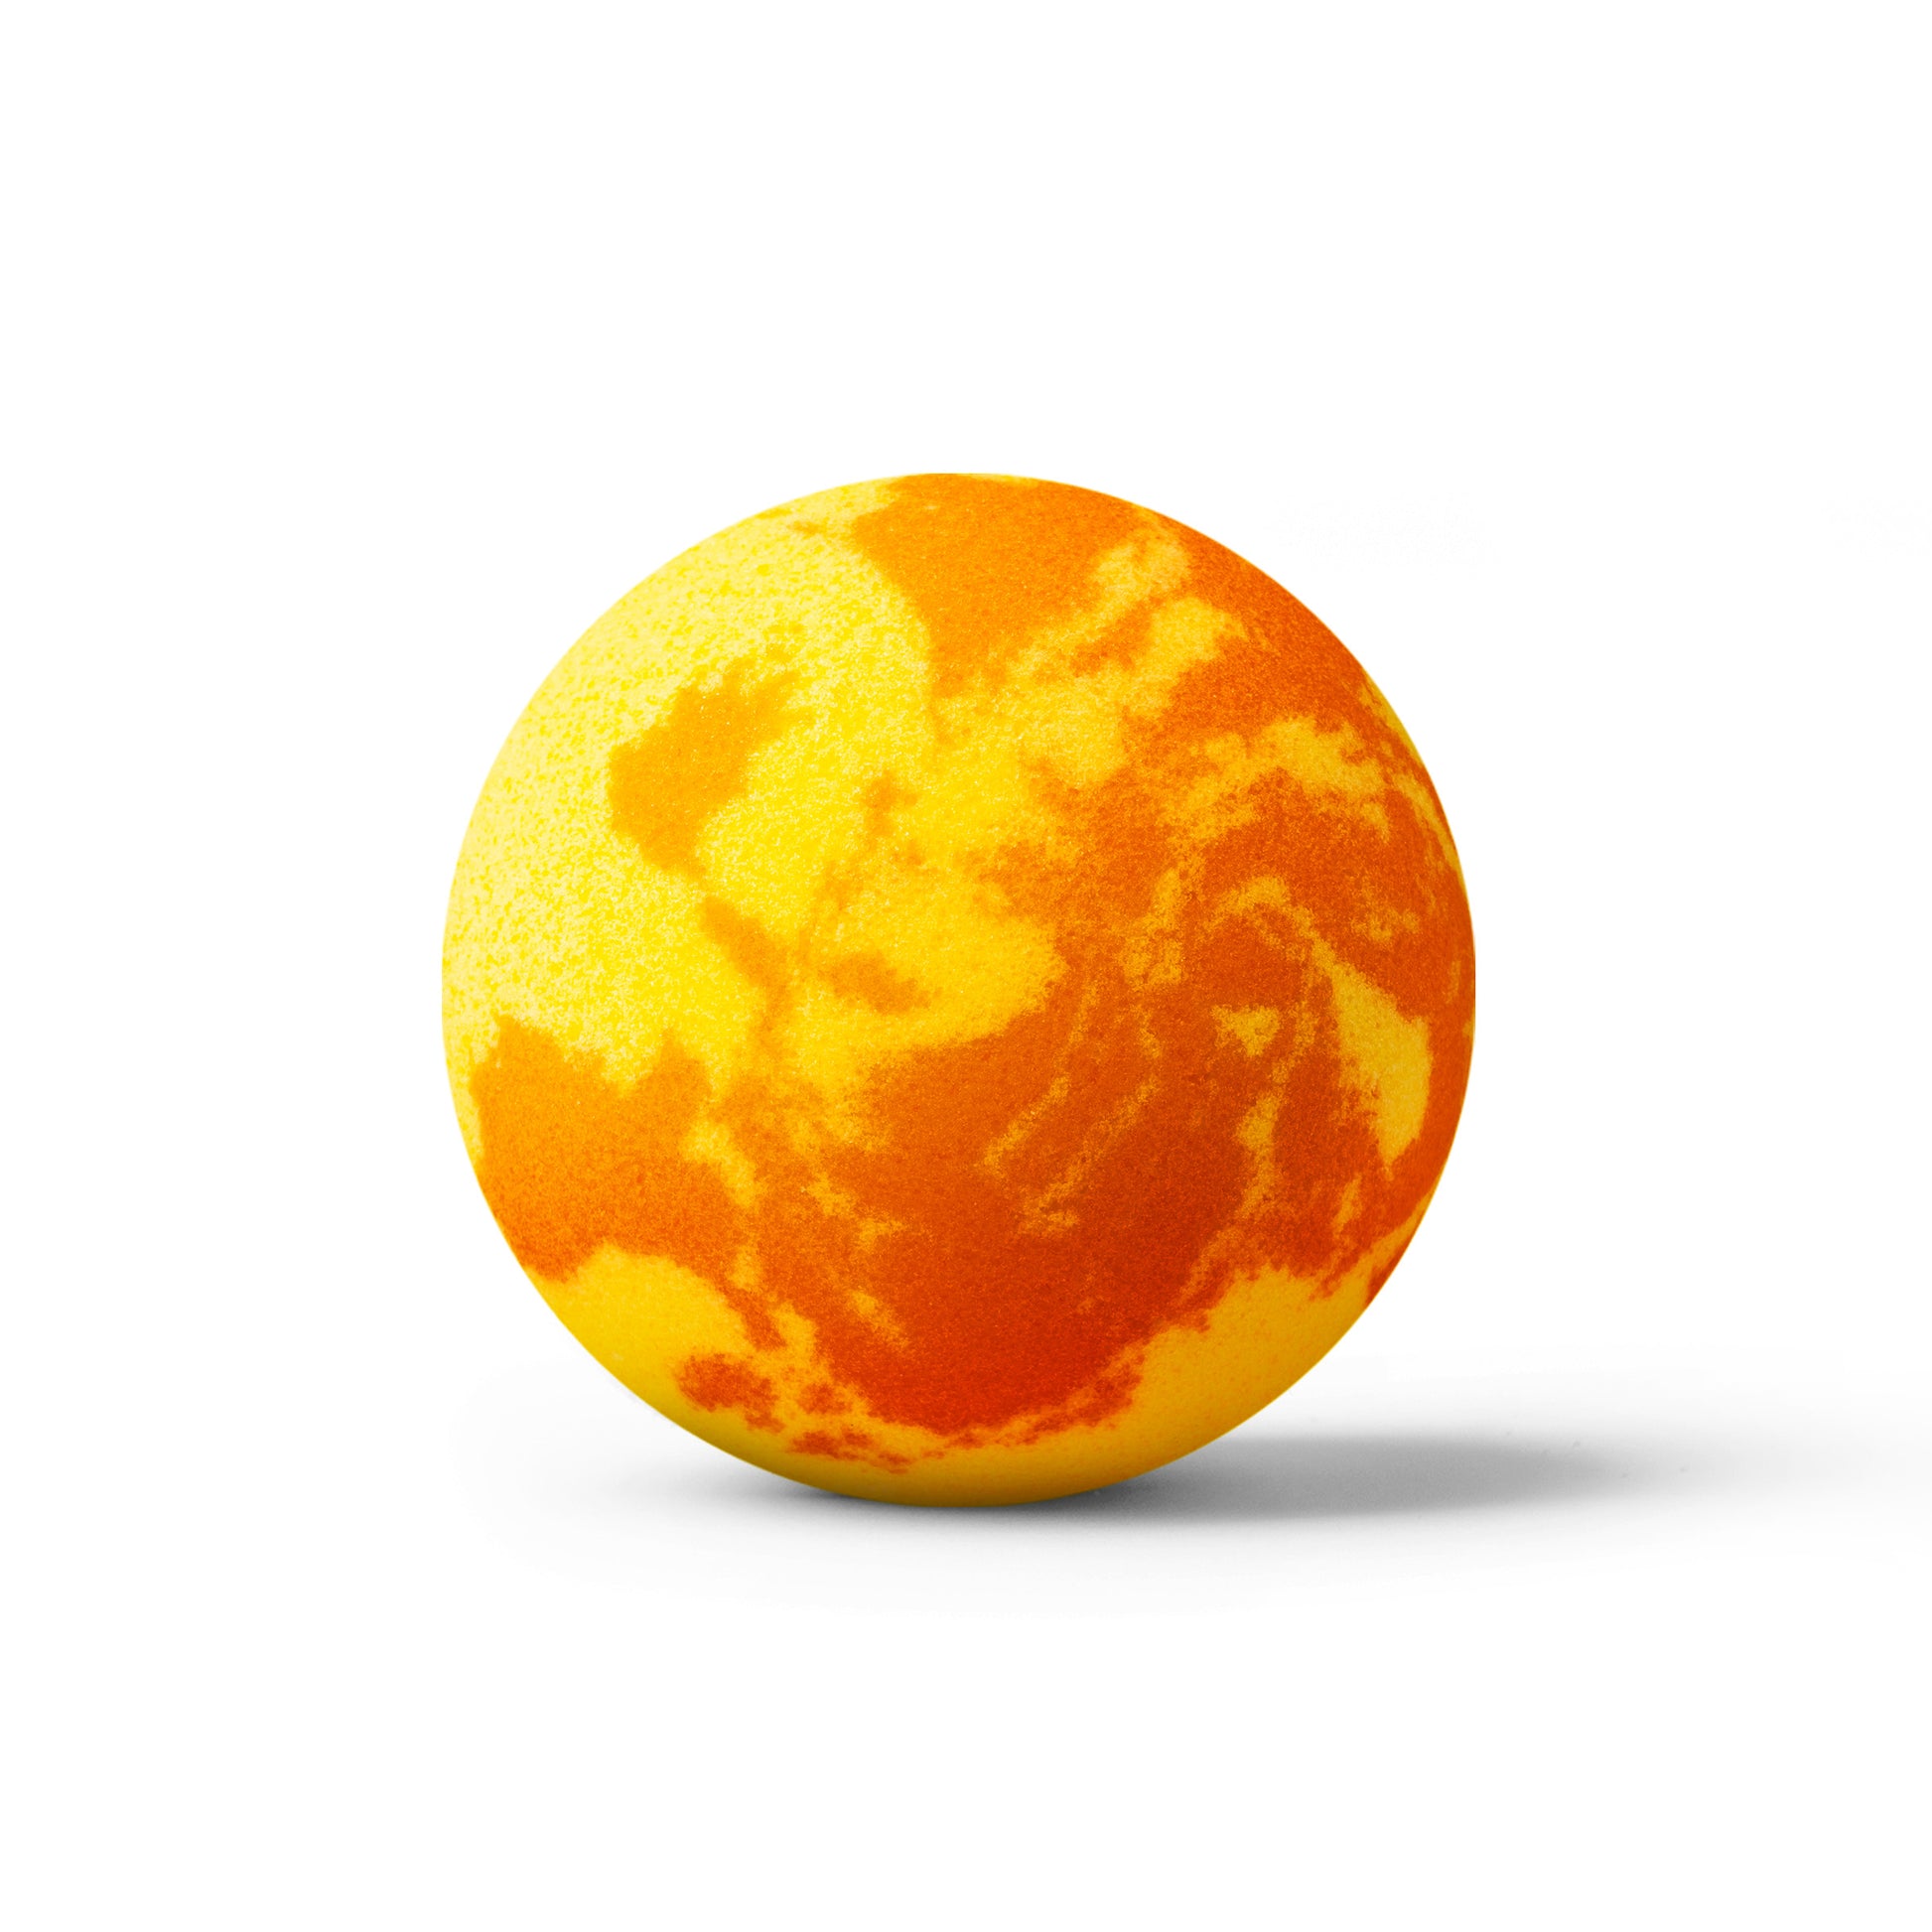 yellow and orange bath bomb with shadow